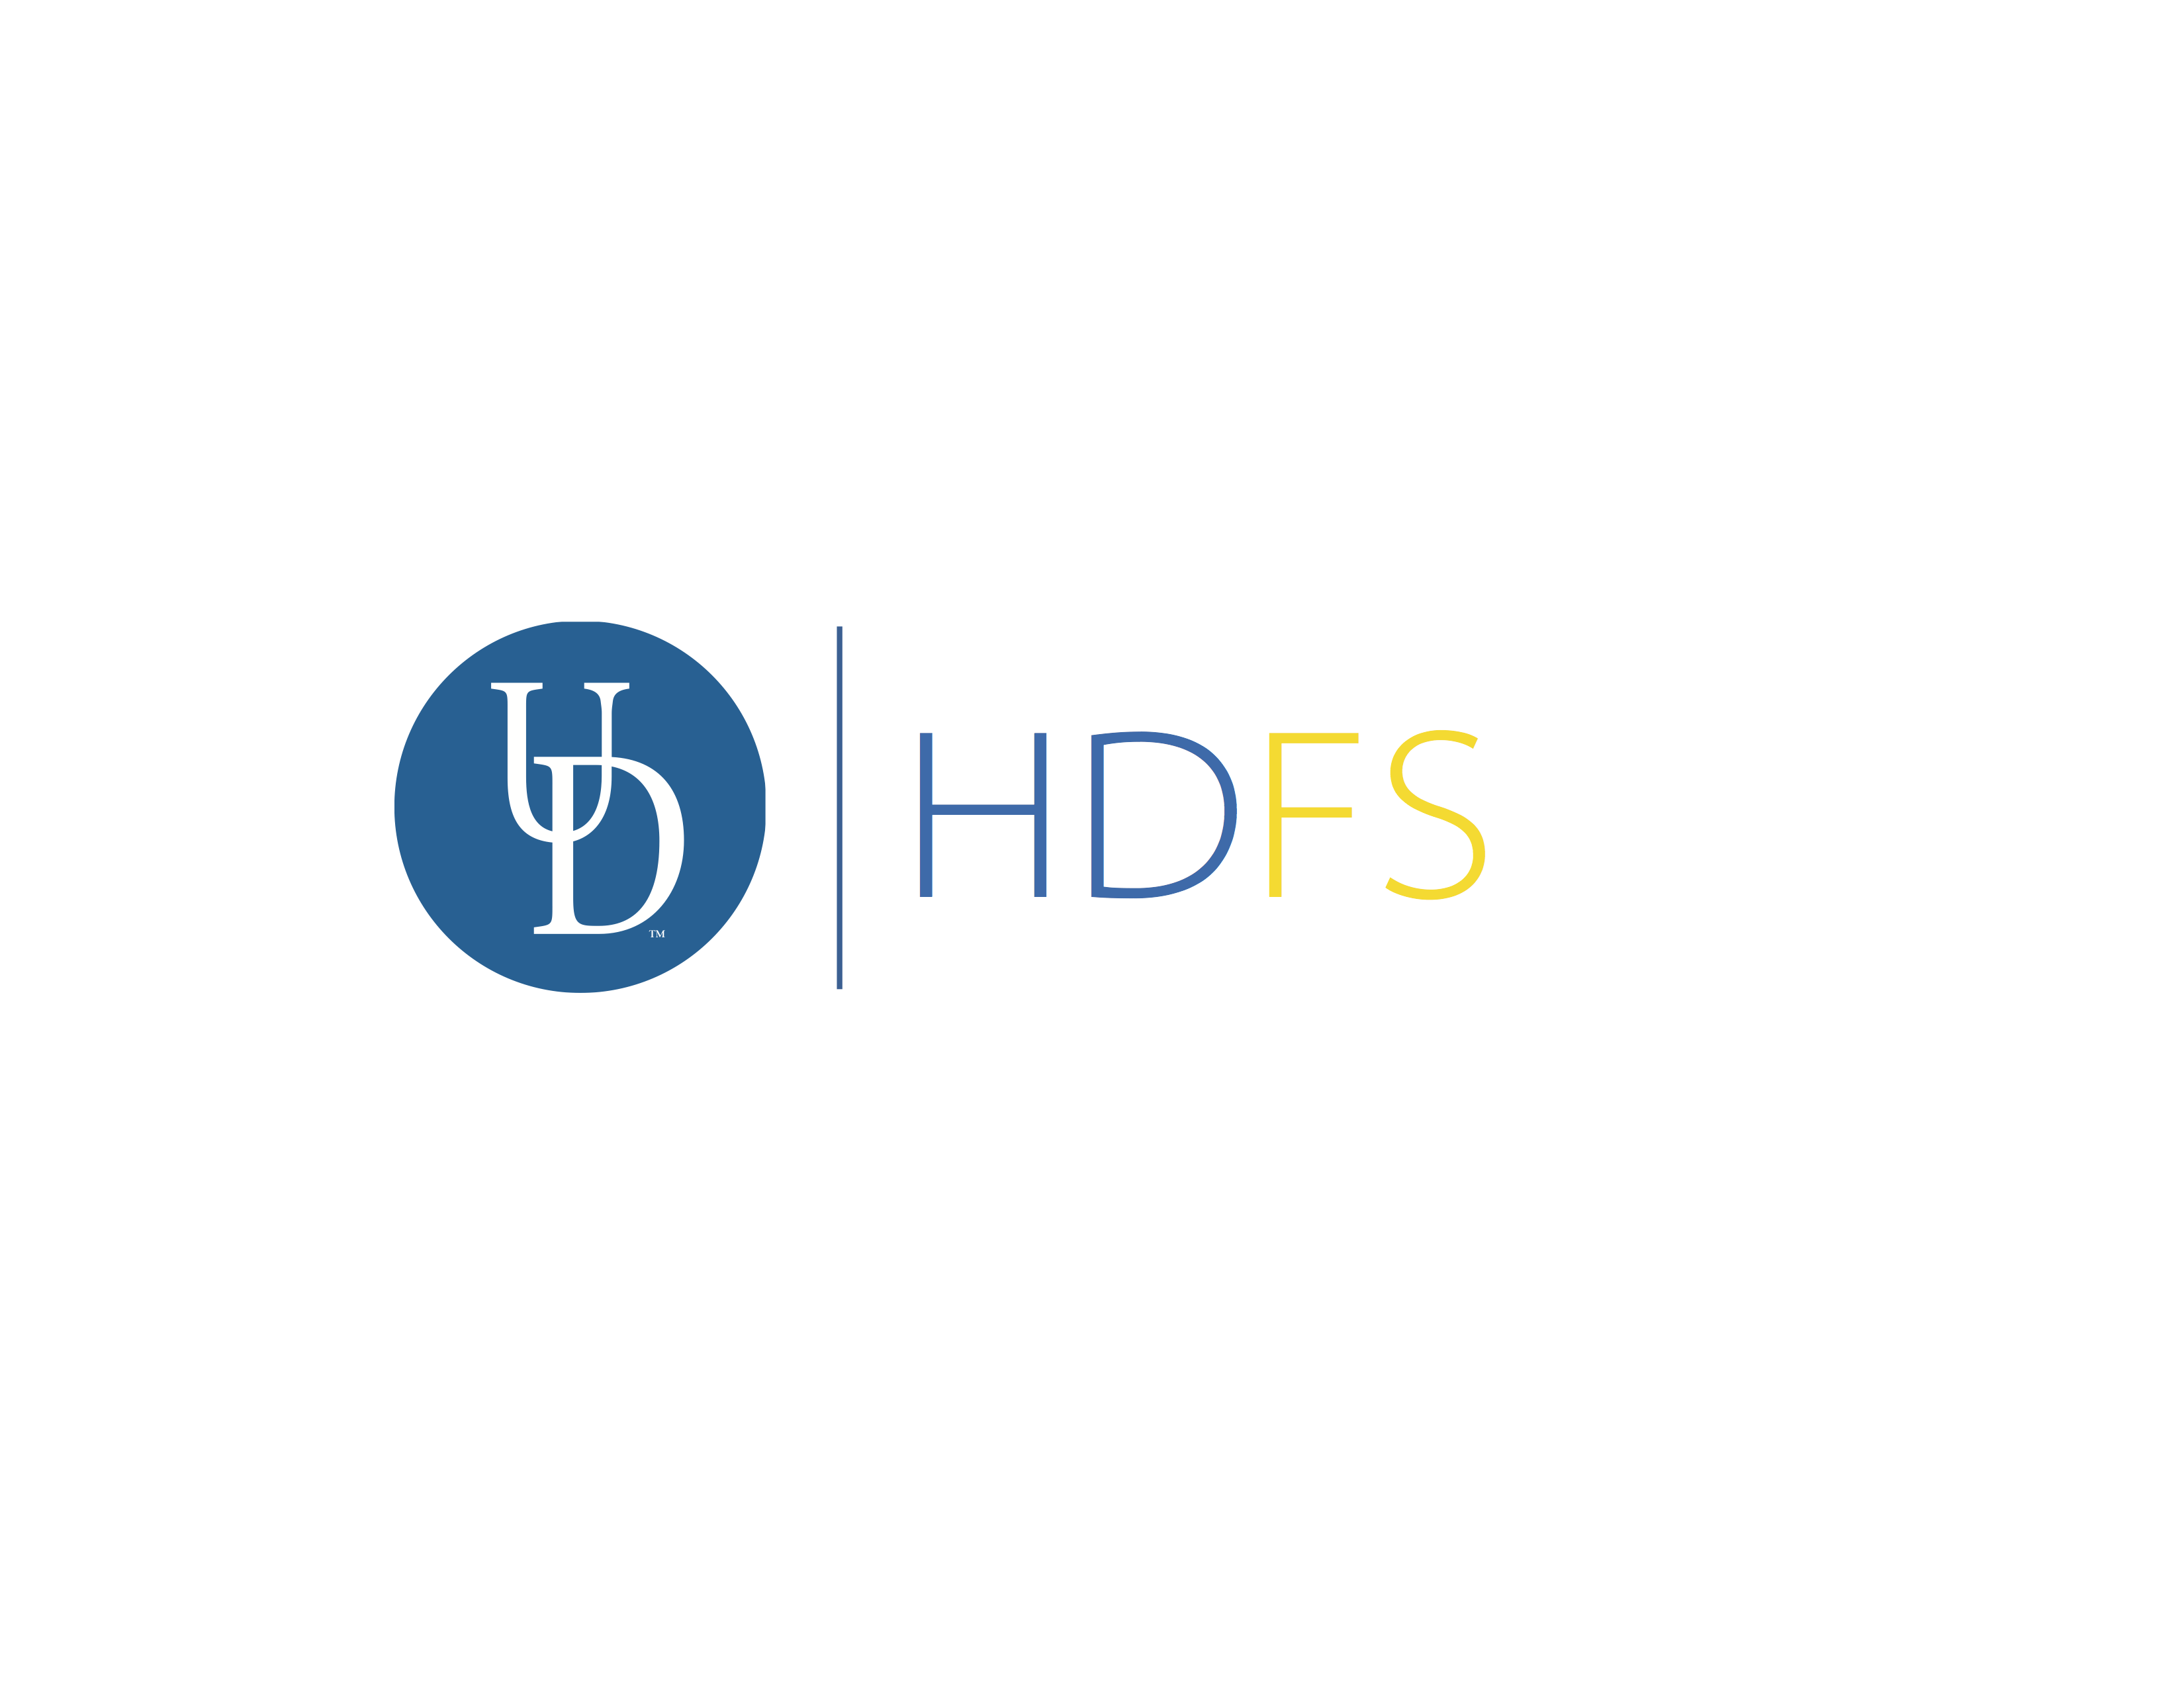 HDFS Logo - hdfs logo